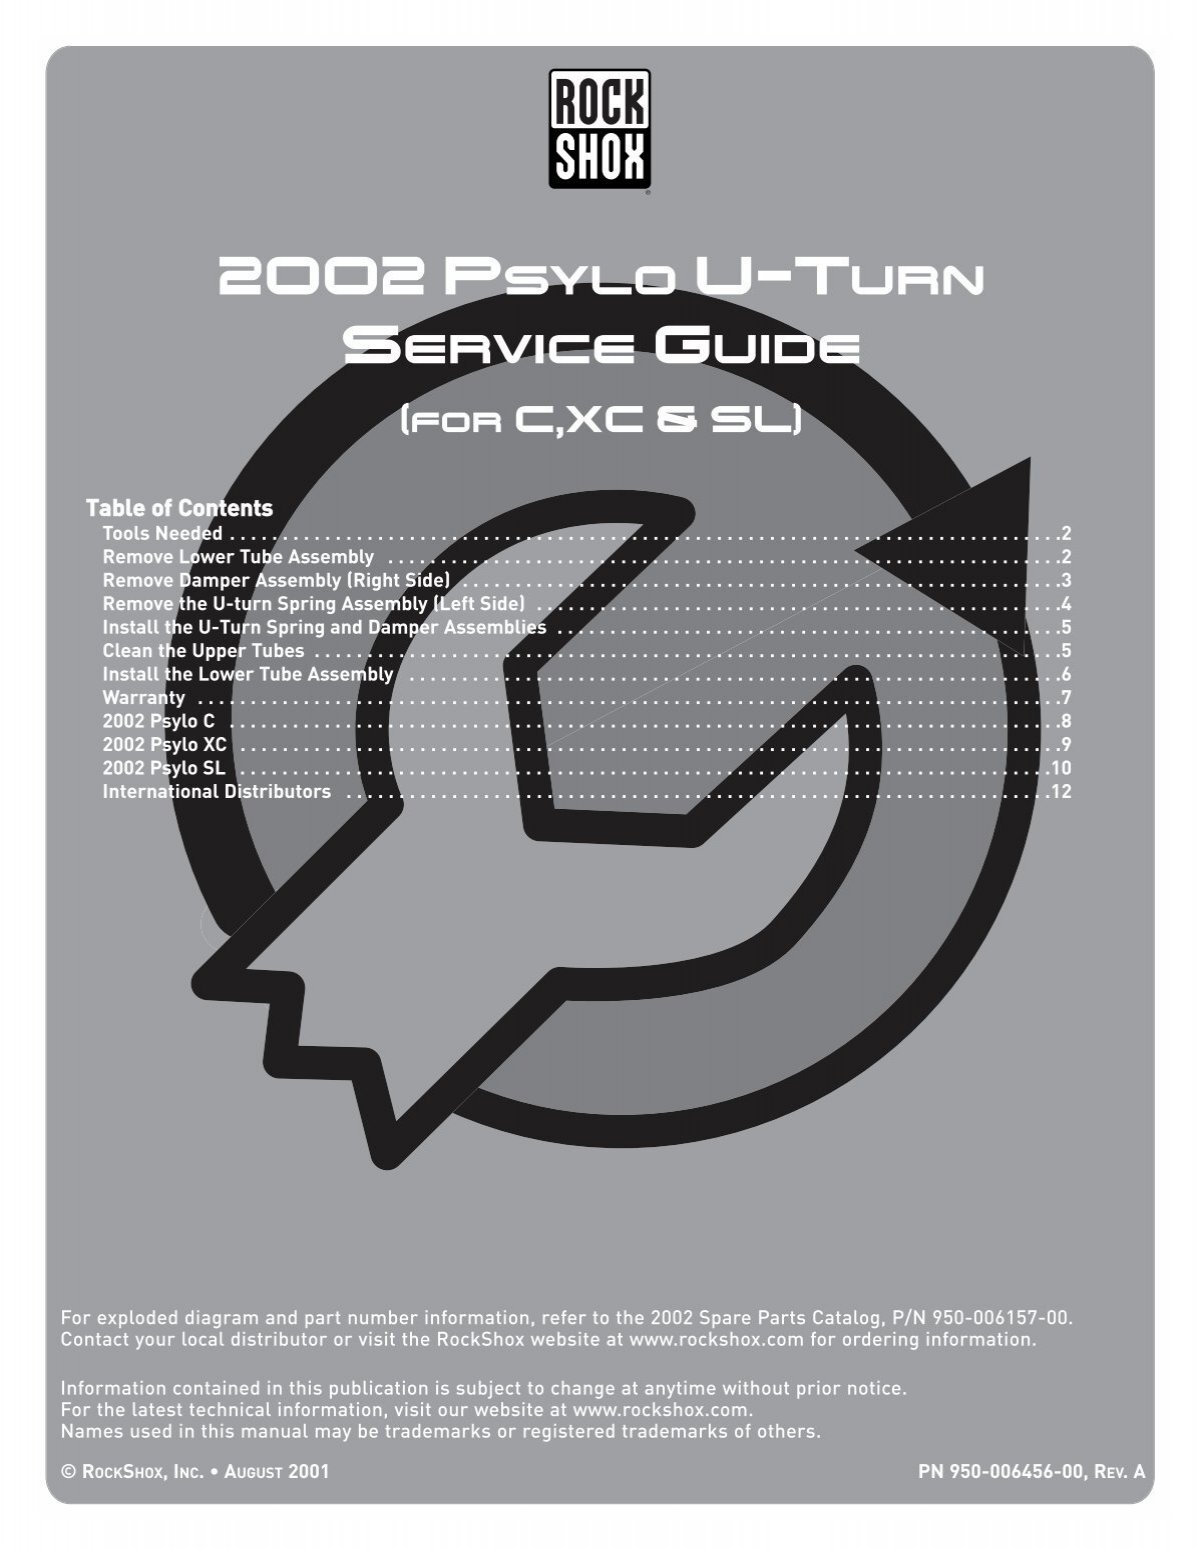 2002 psylo u-turn service guide.pdf